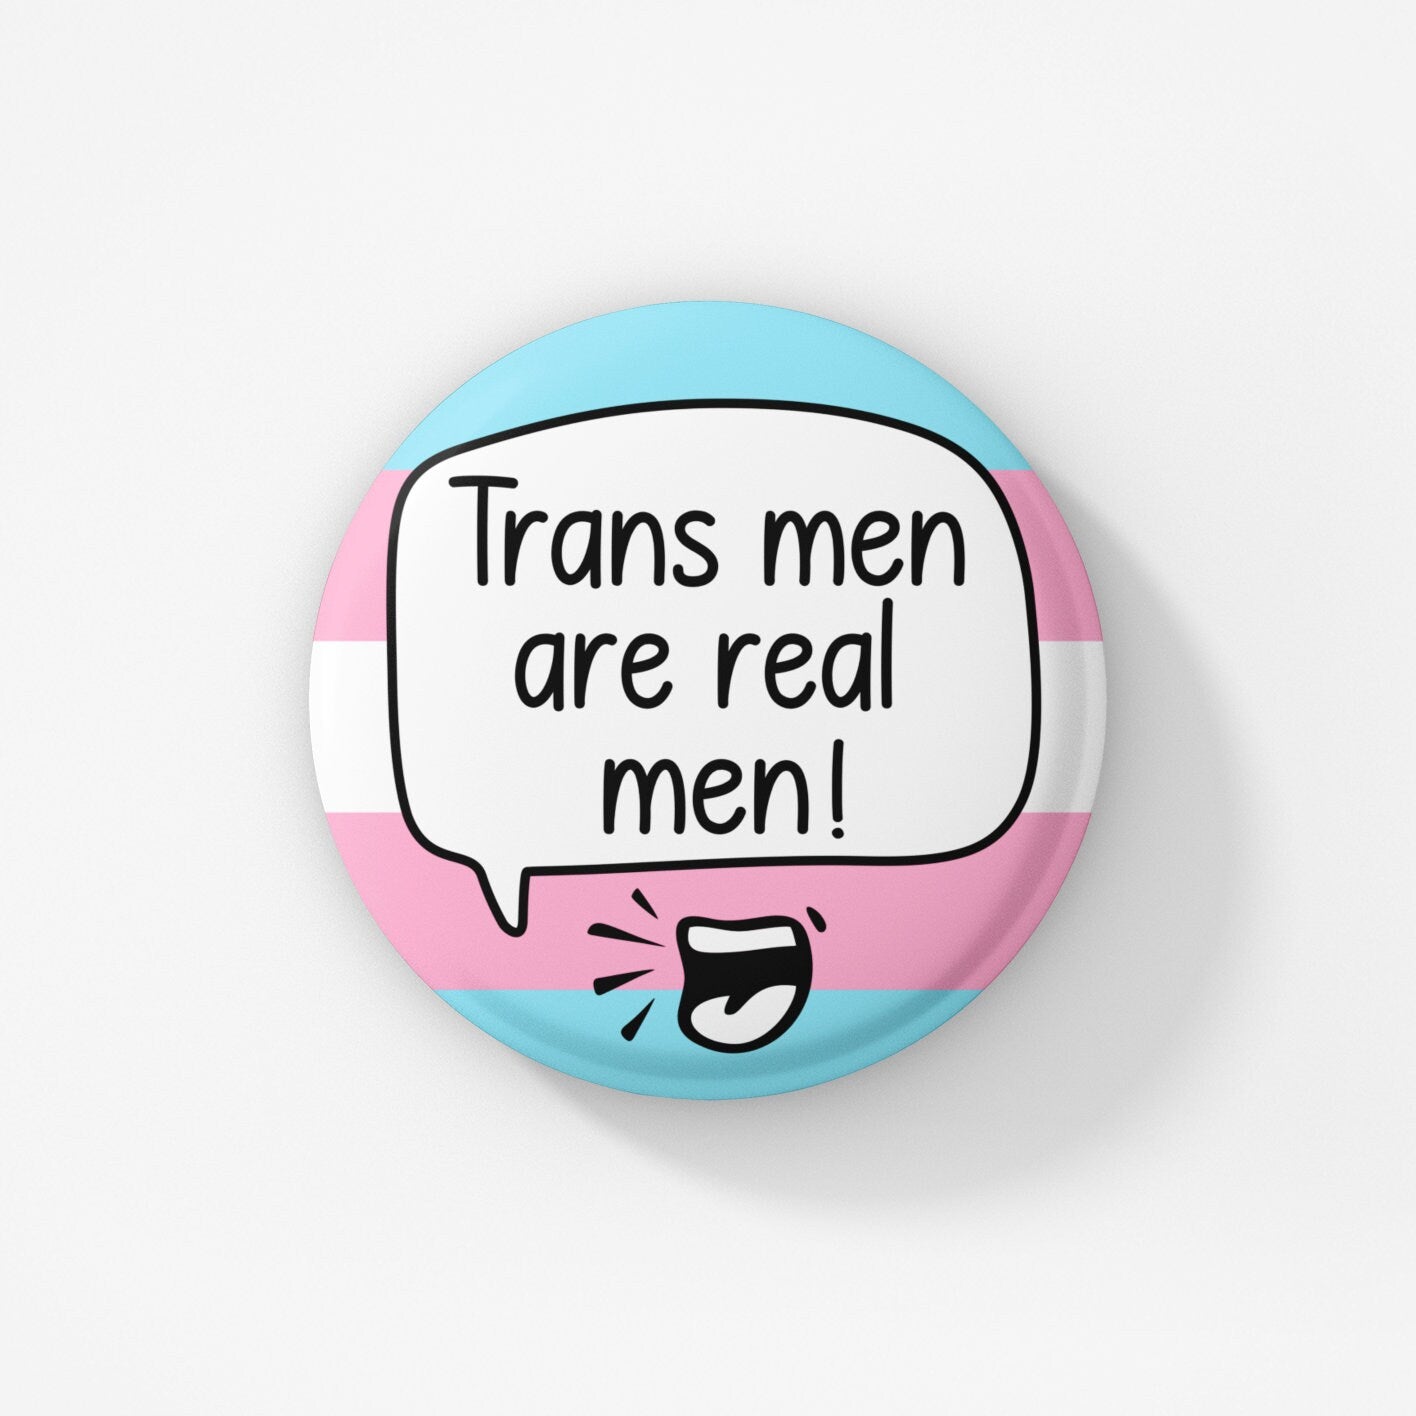 Trans Men Are Real Men Badge Pin | Transgender - Trans Pins - Gender Badge